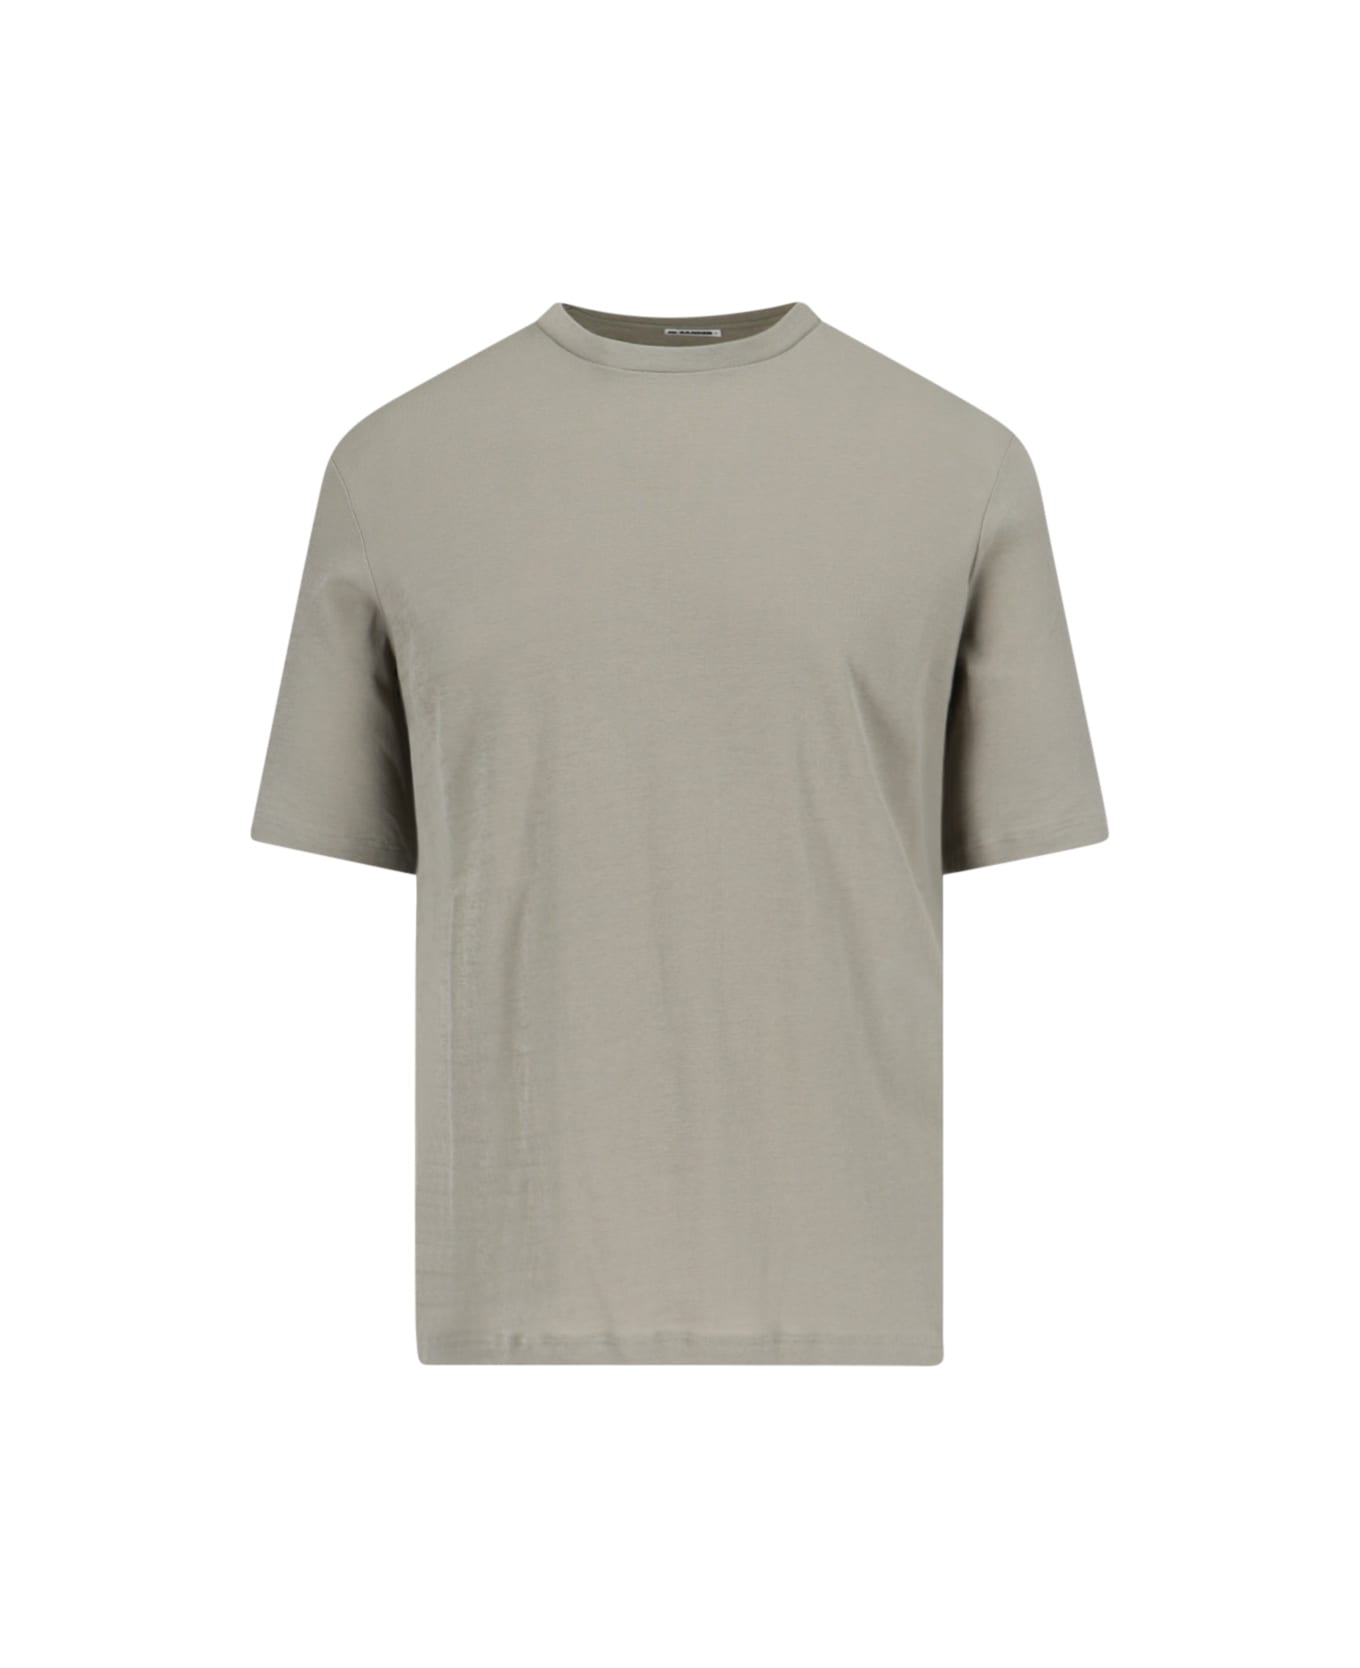 Jil Sander '3-pack' T-shirt Set - Brown